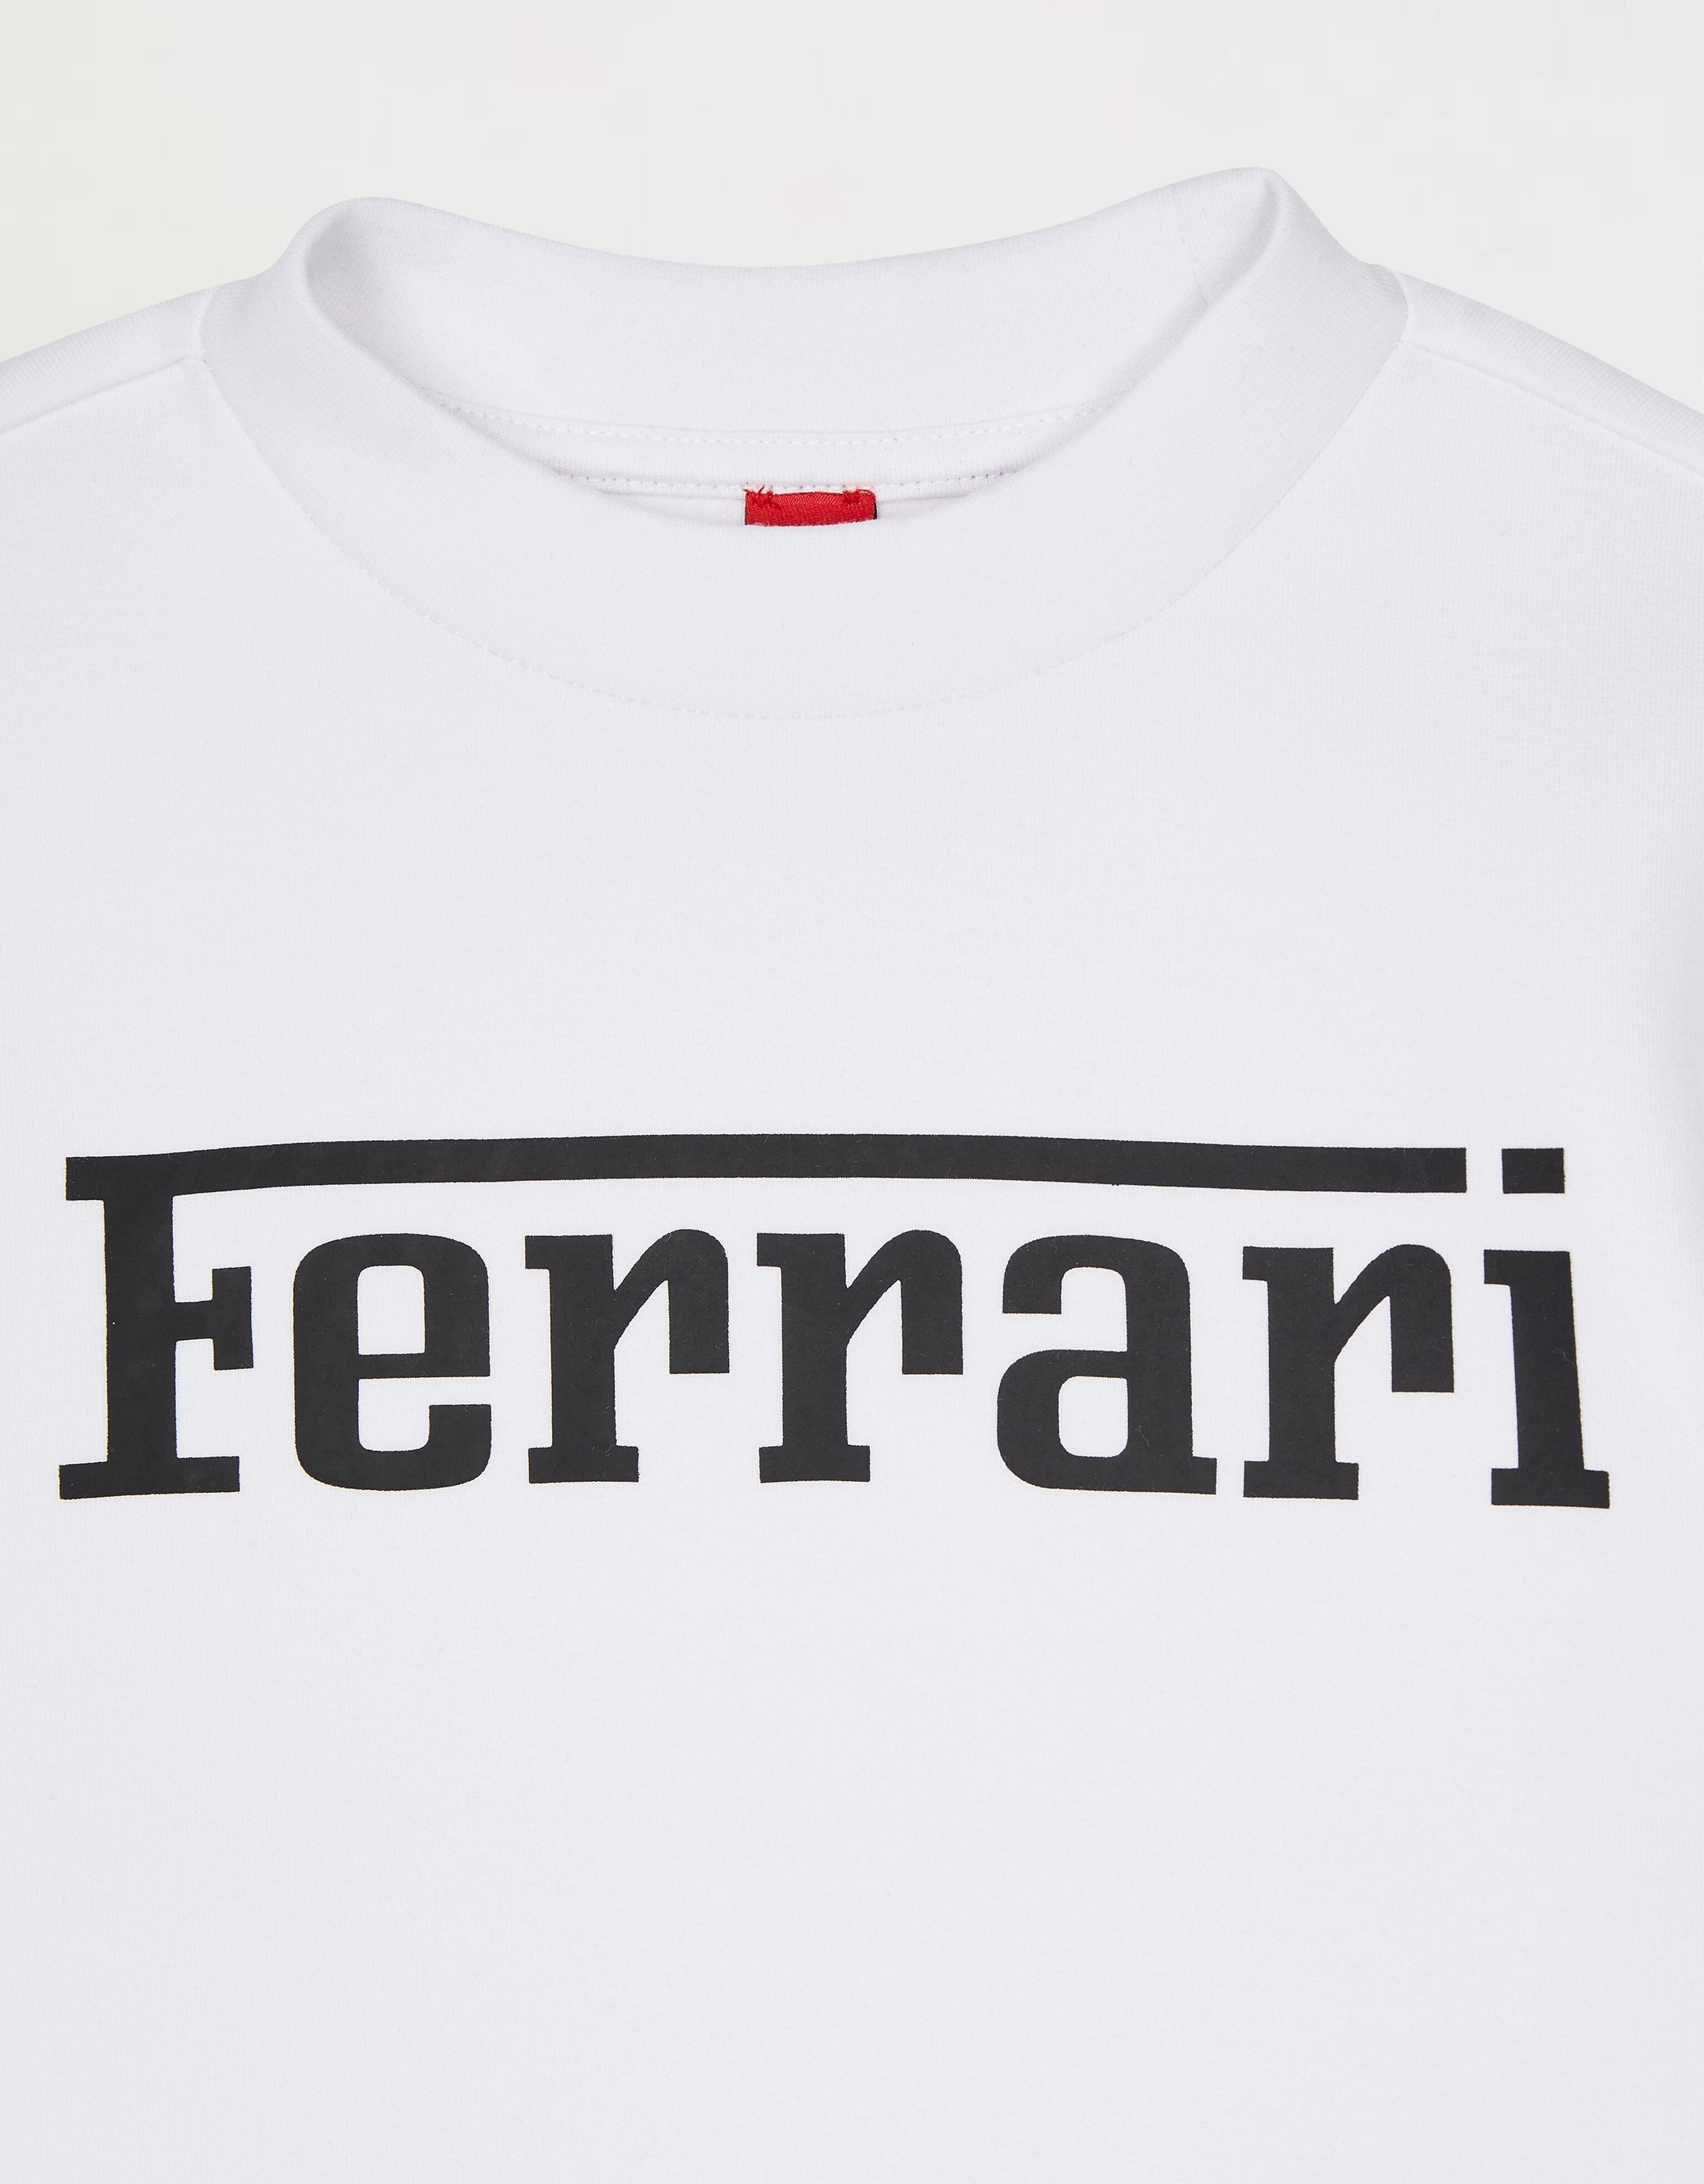 Ferrari Children’s sweatshirt in recycled scuba fabric with large Ferrari logo Optical White 46994fK